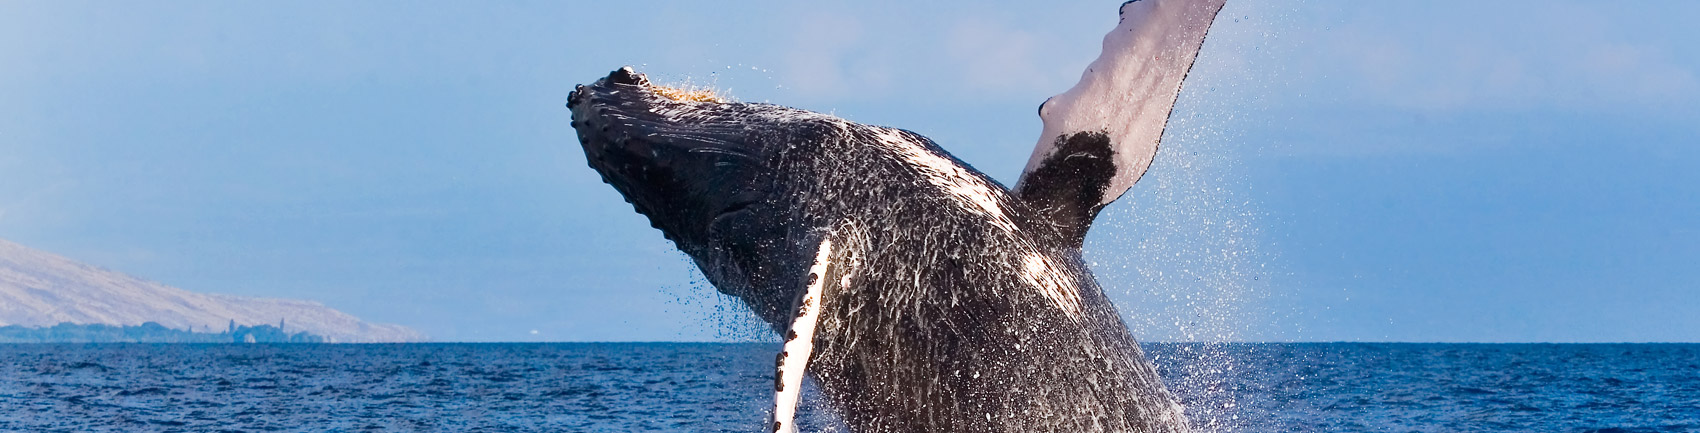 Whale breaching the ocean surface